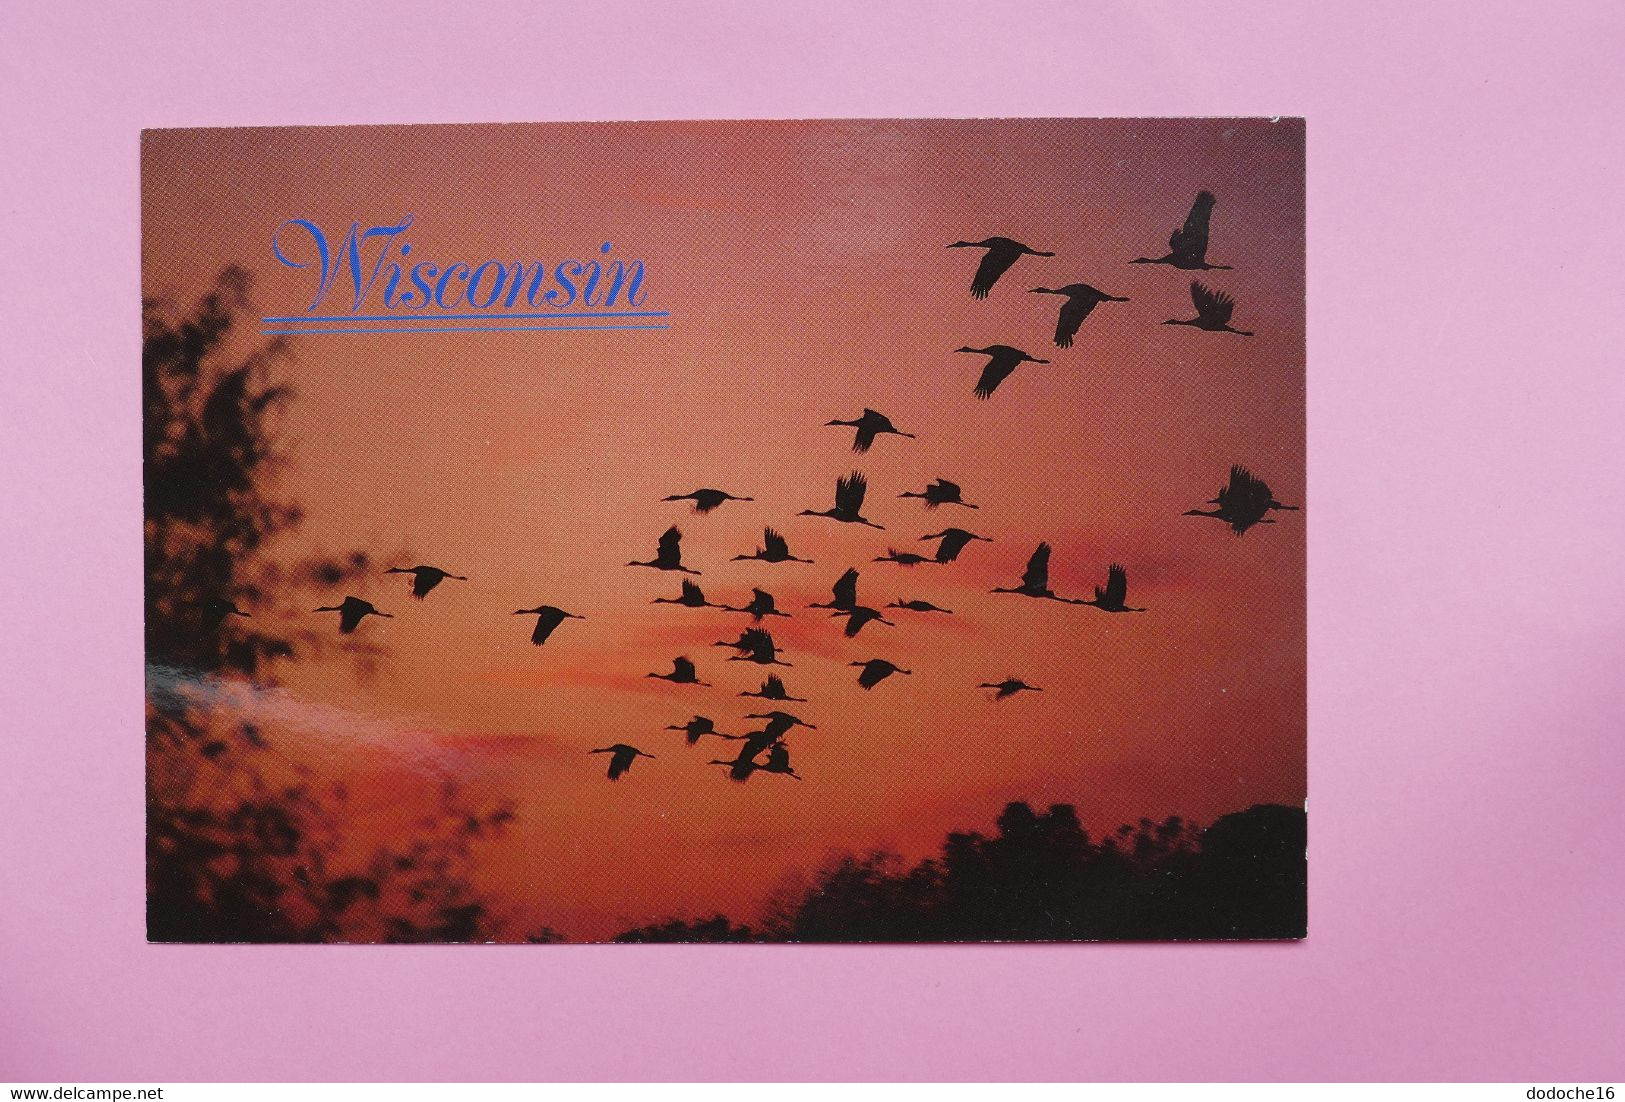 WISCONSIN - Sandhill Cranes At Sunset - Racine